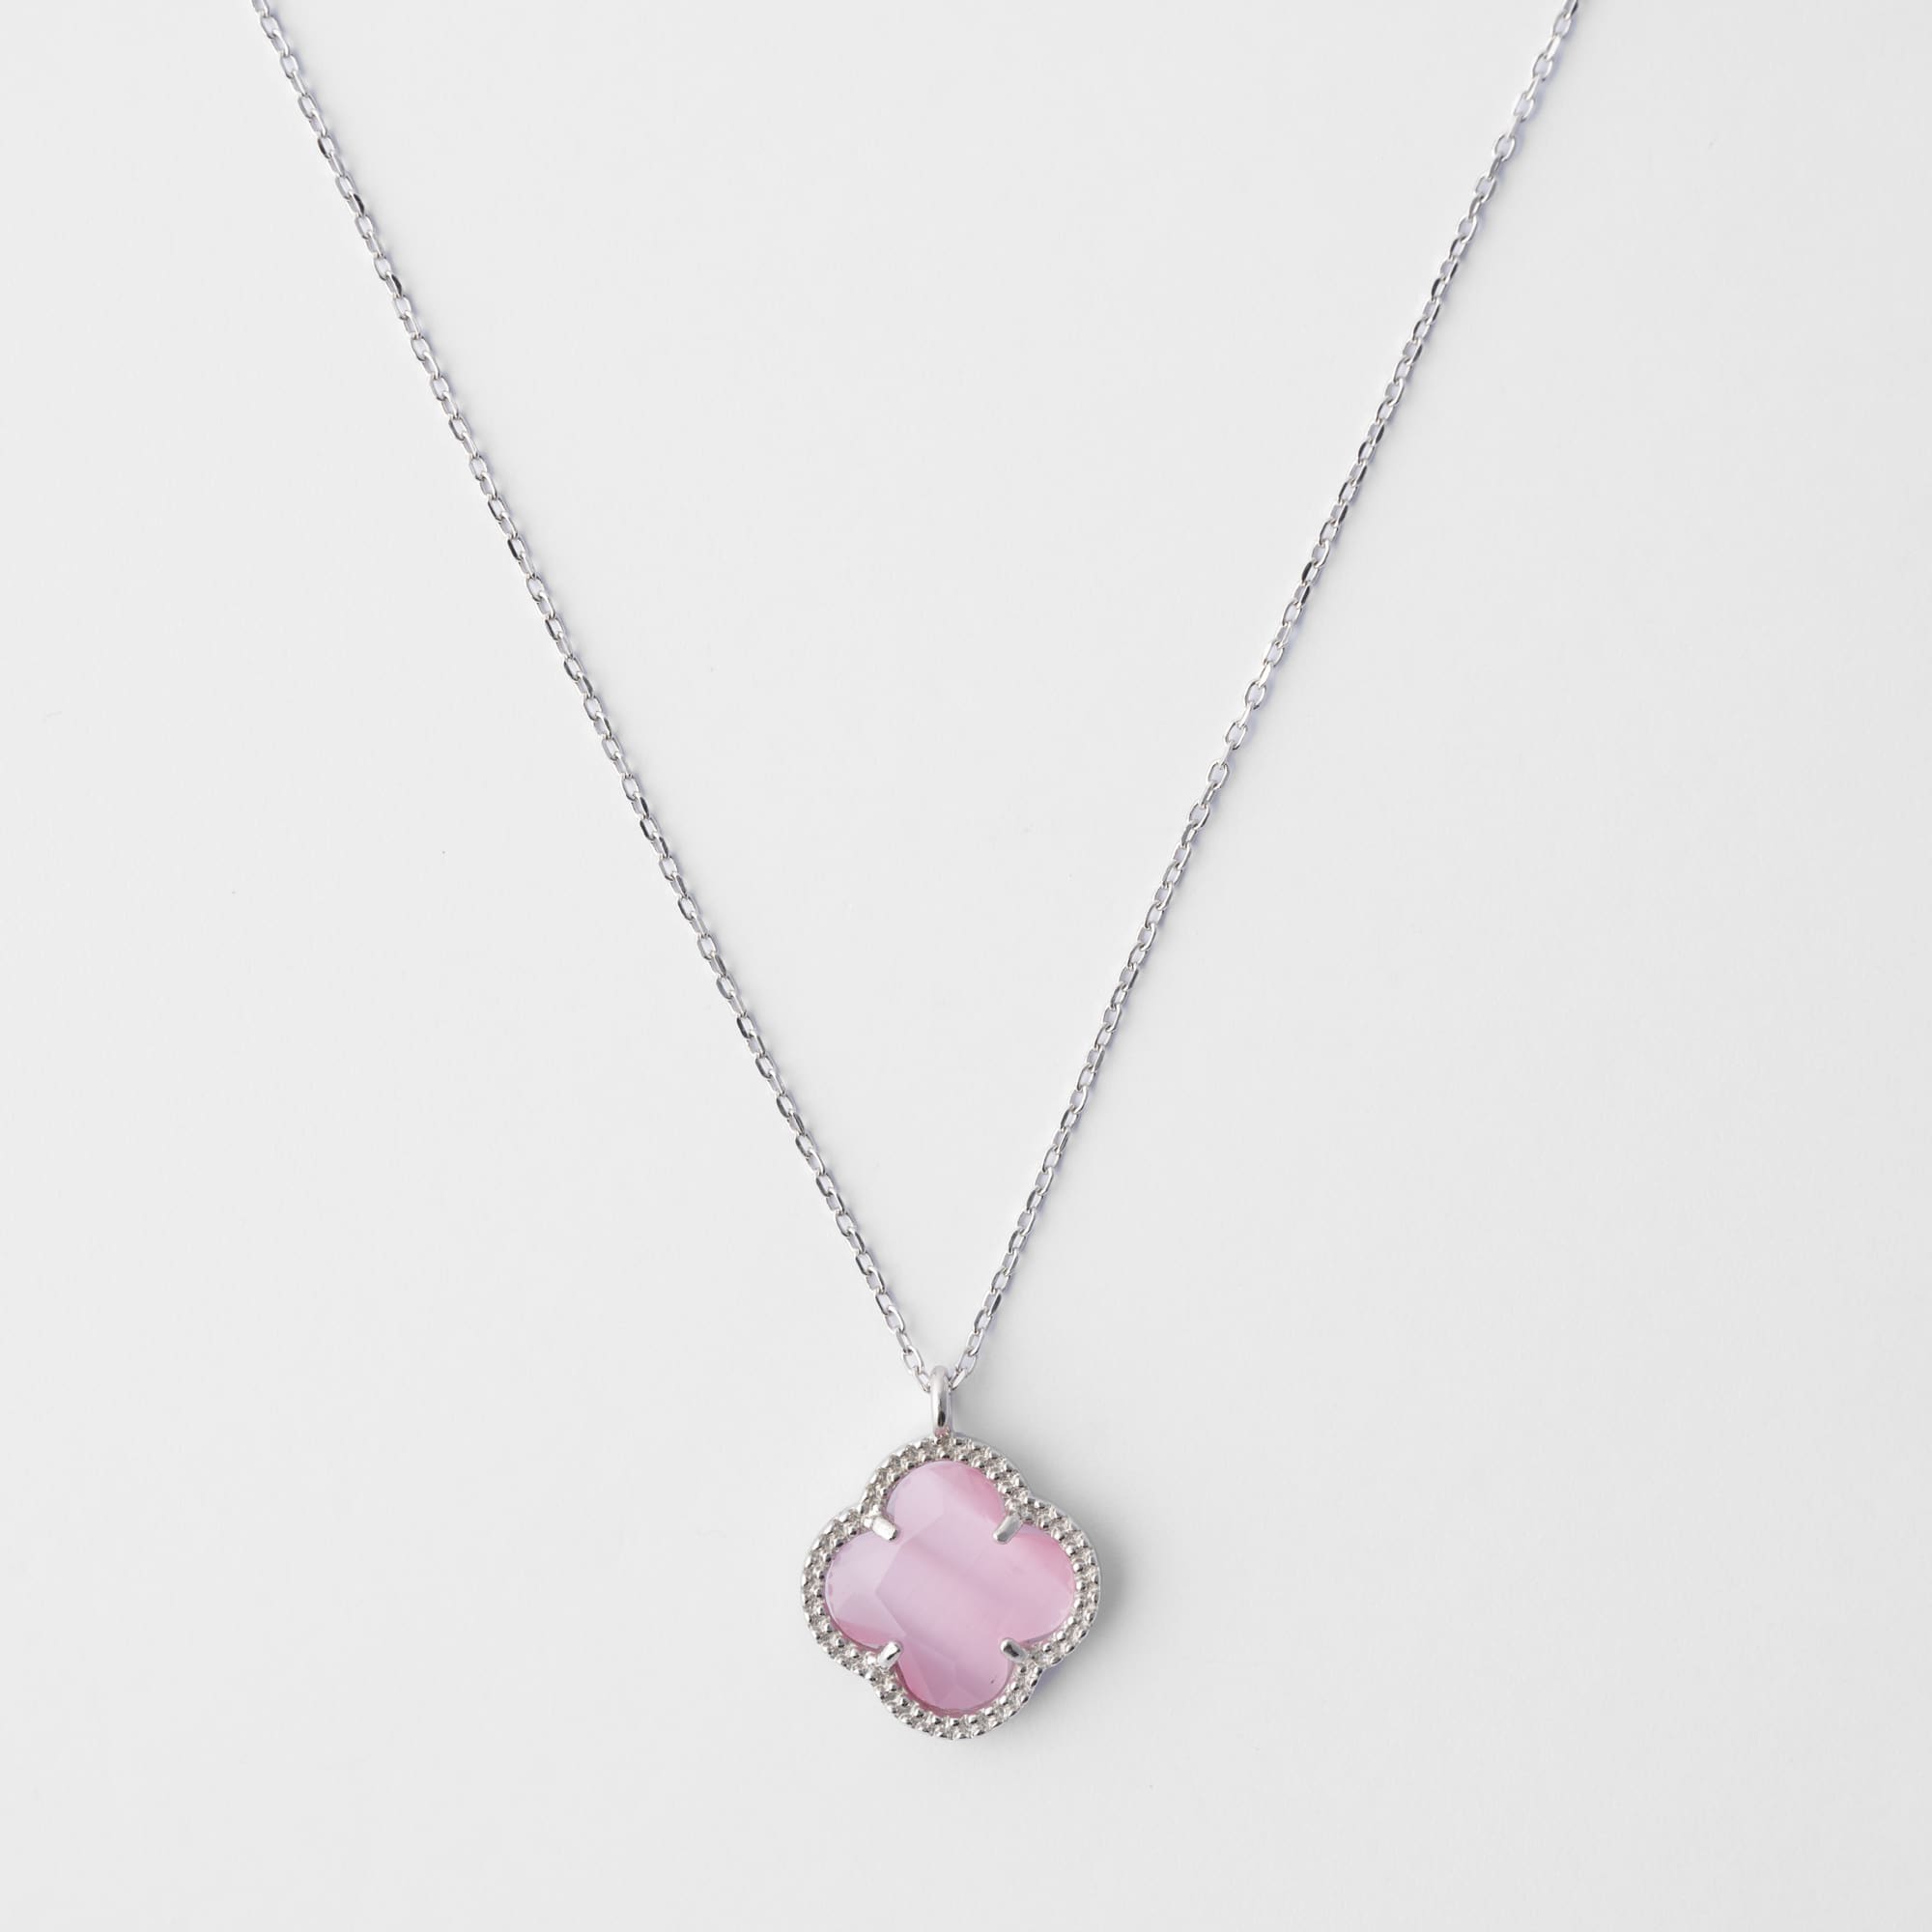 CLOVER Necklace with Pink Quartz